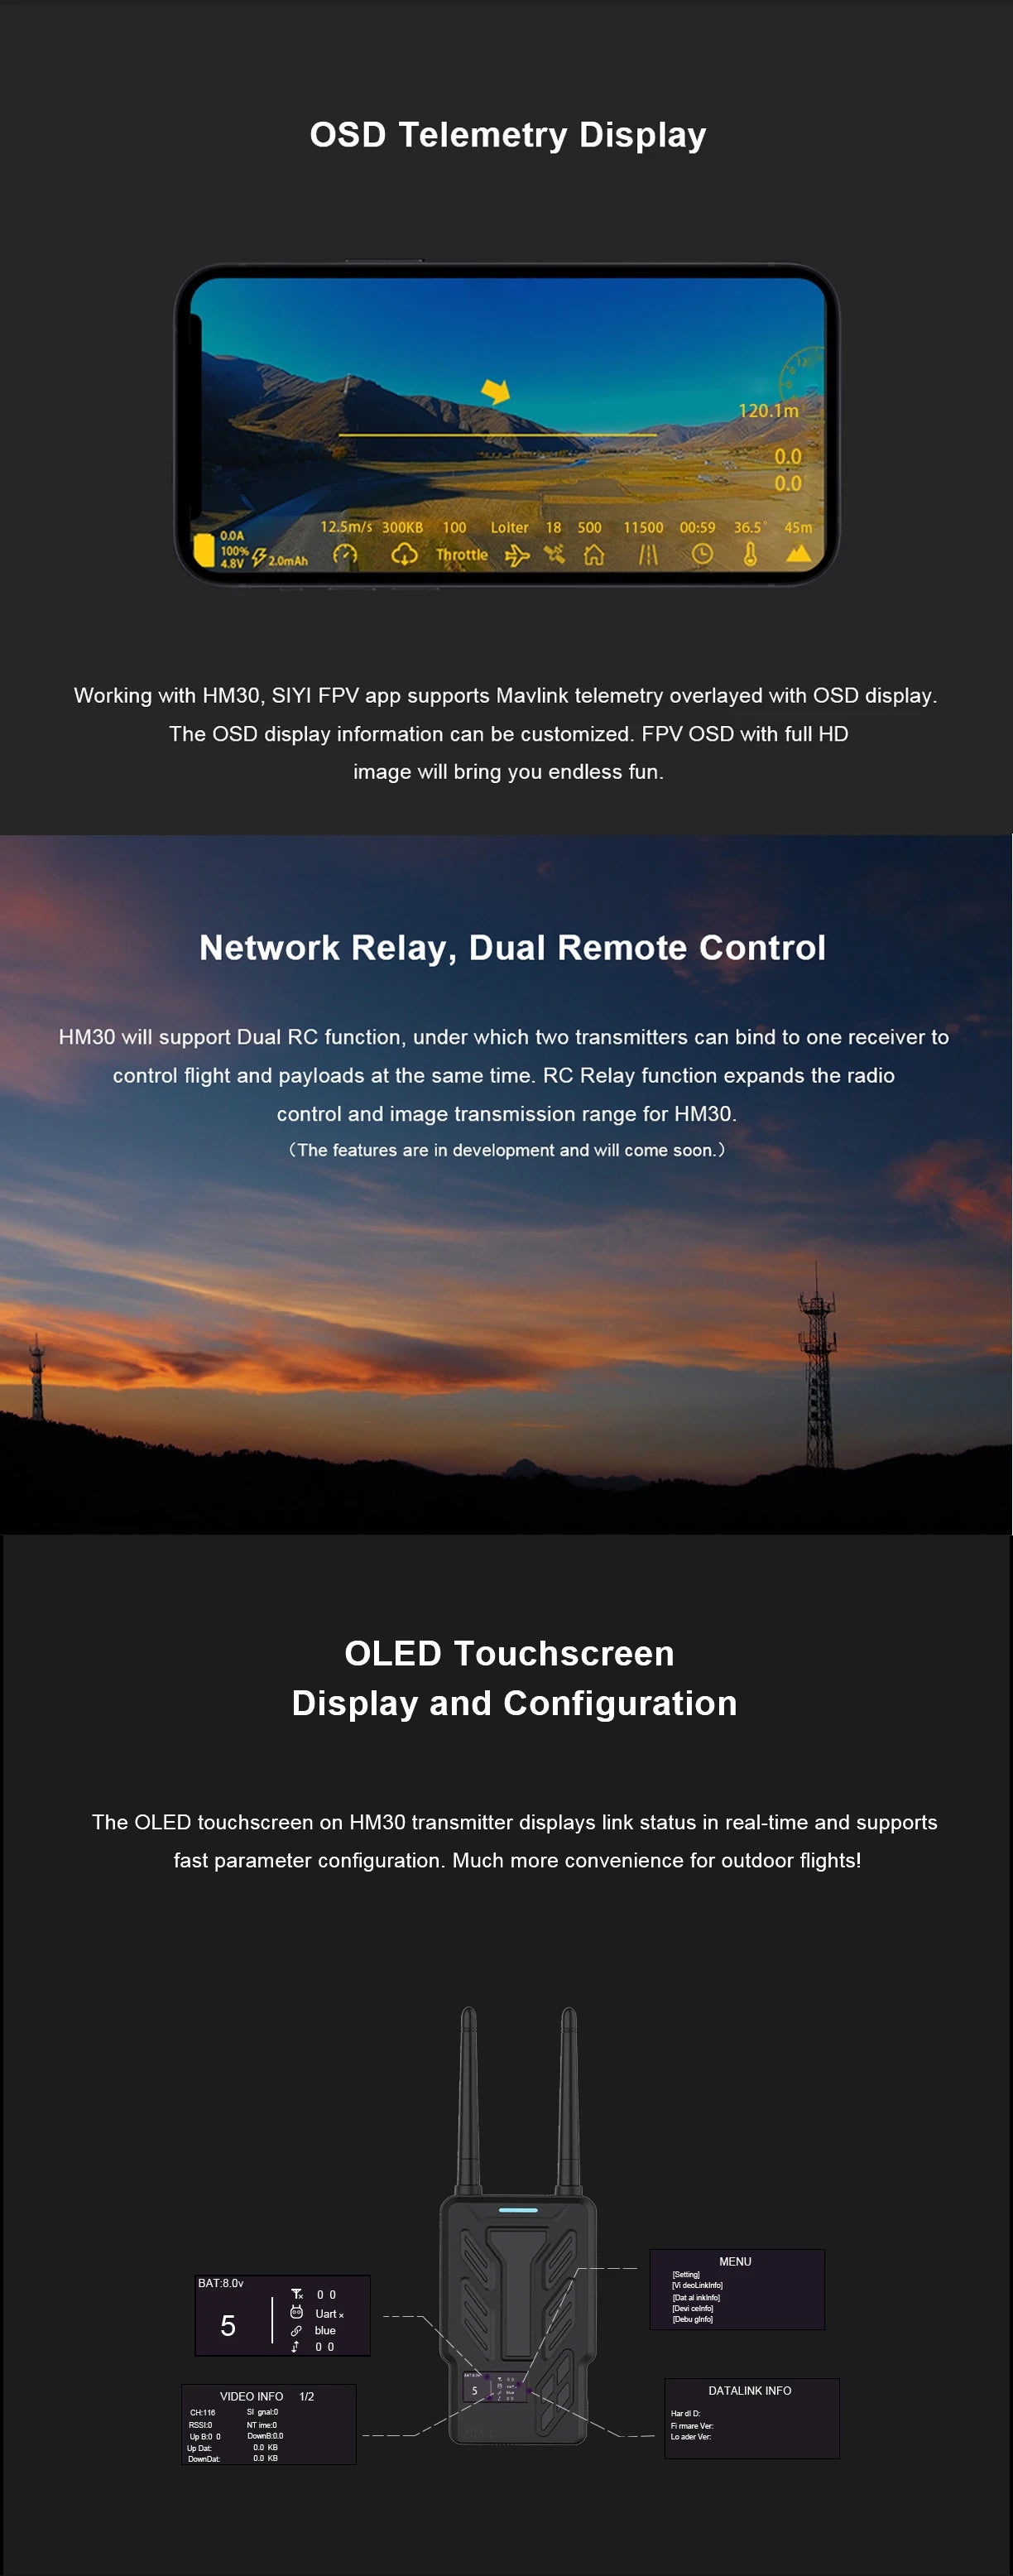 OSD Telemetry Display 120.1m 0.0 0.0 12.Sm/s 300KB